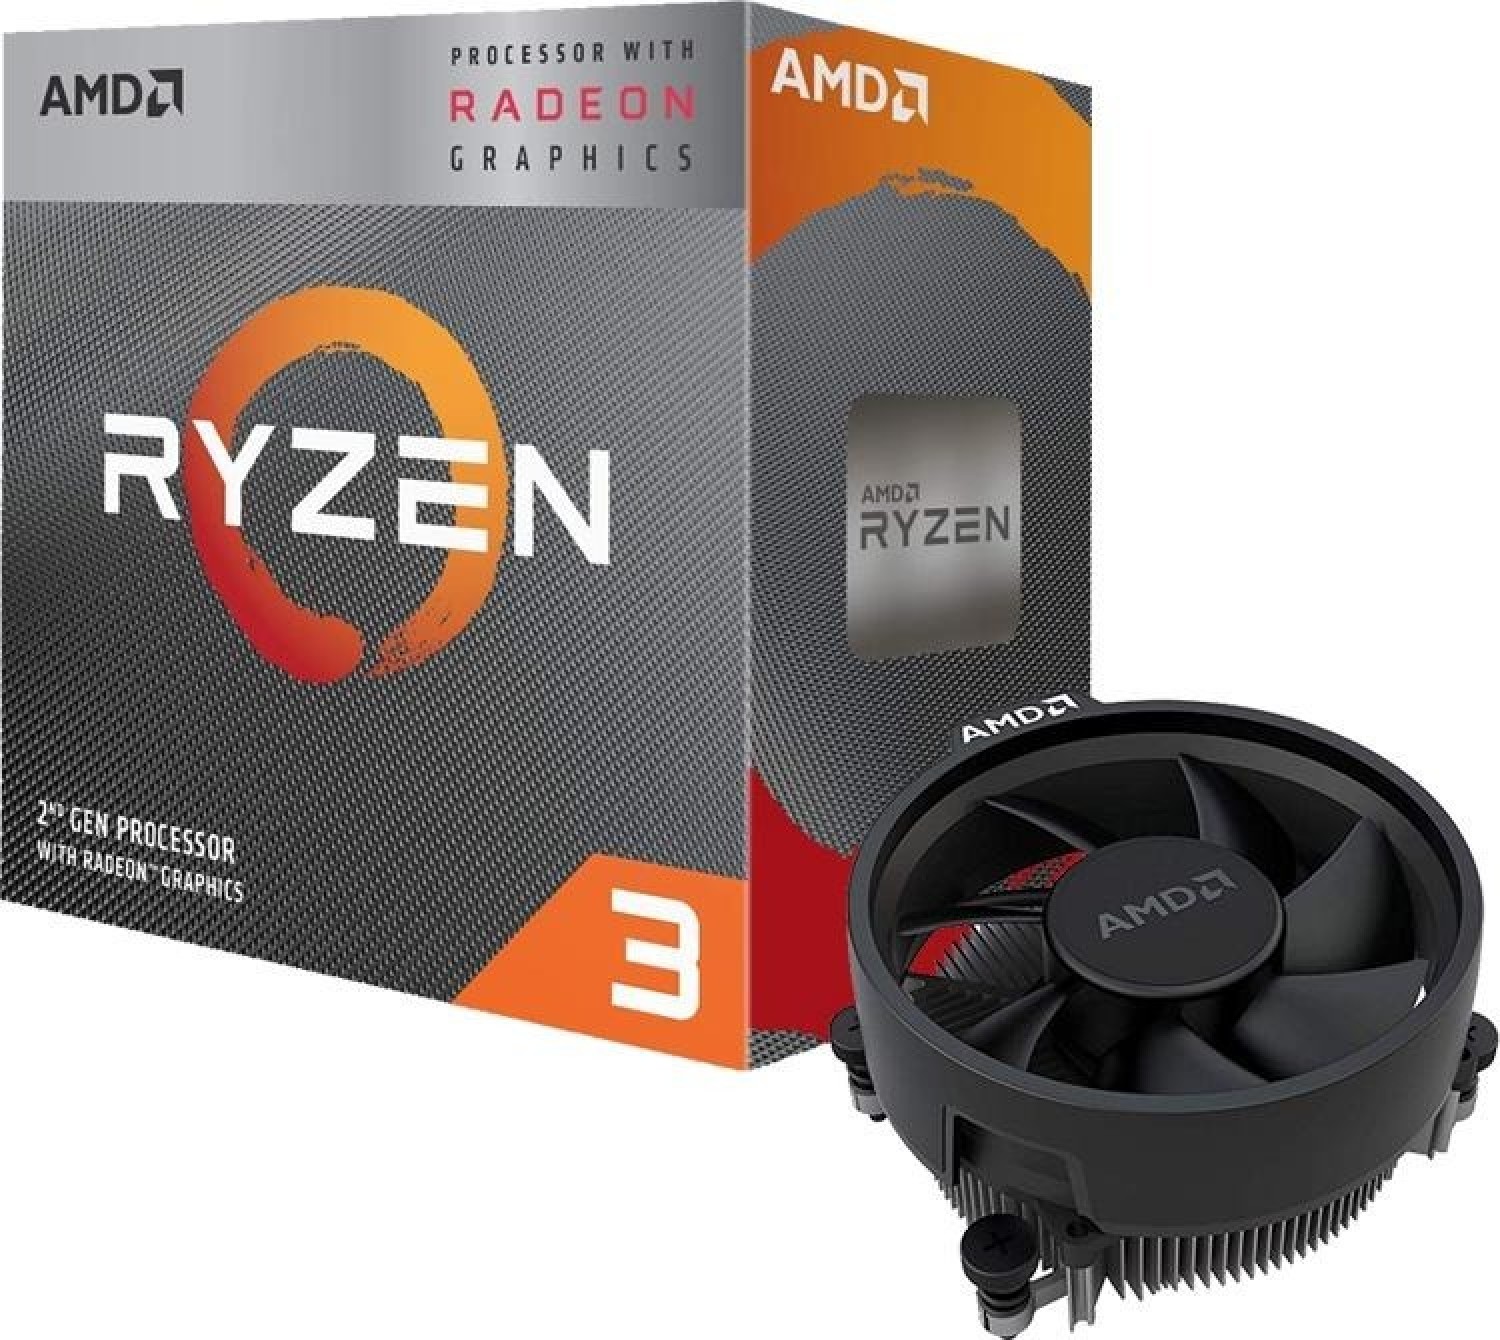 PROCESADOR AMD RYZEN 3 3200G QUAD-CORE 4.0GHZ TURBO